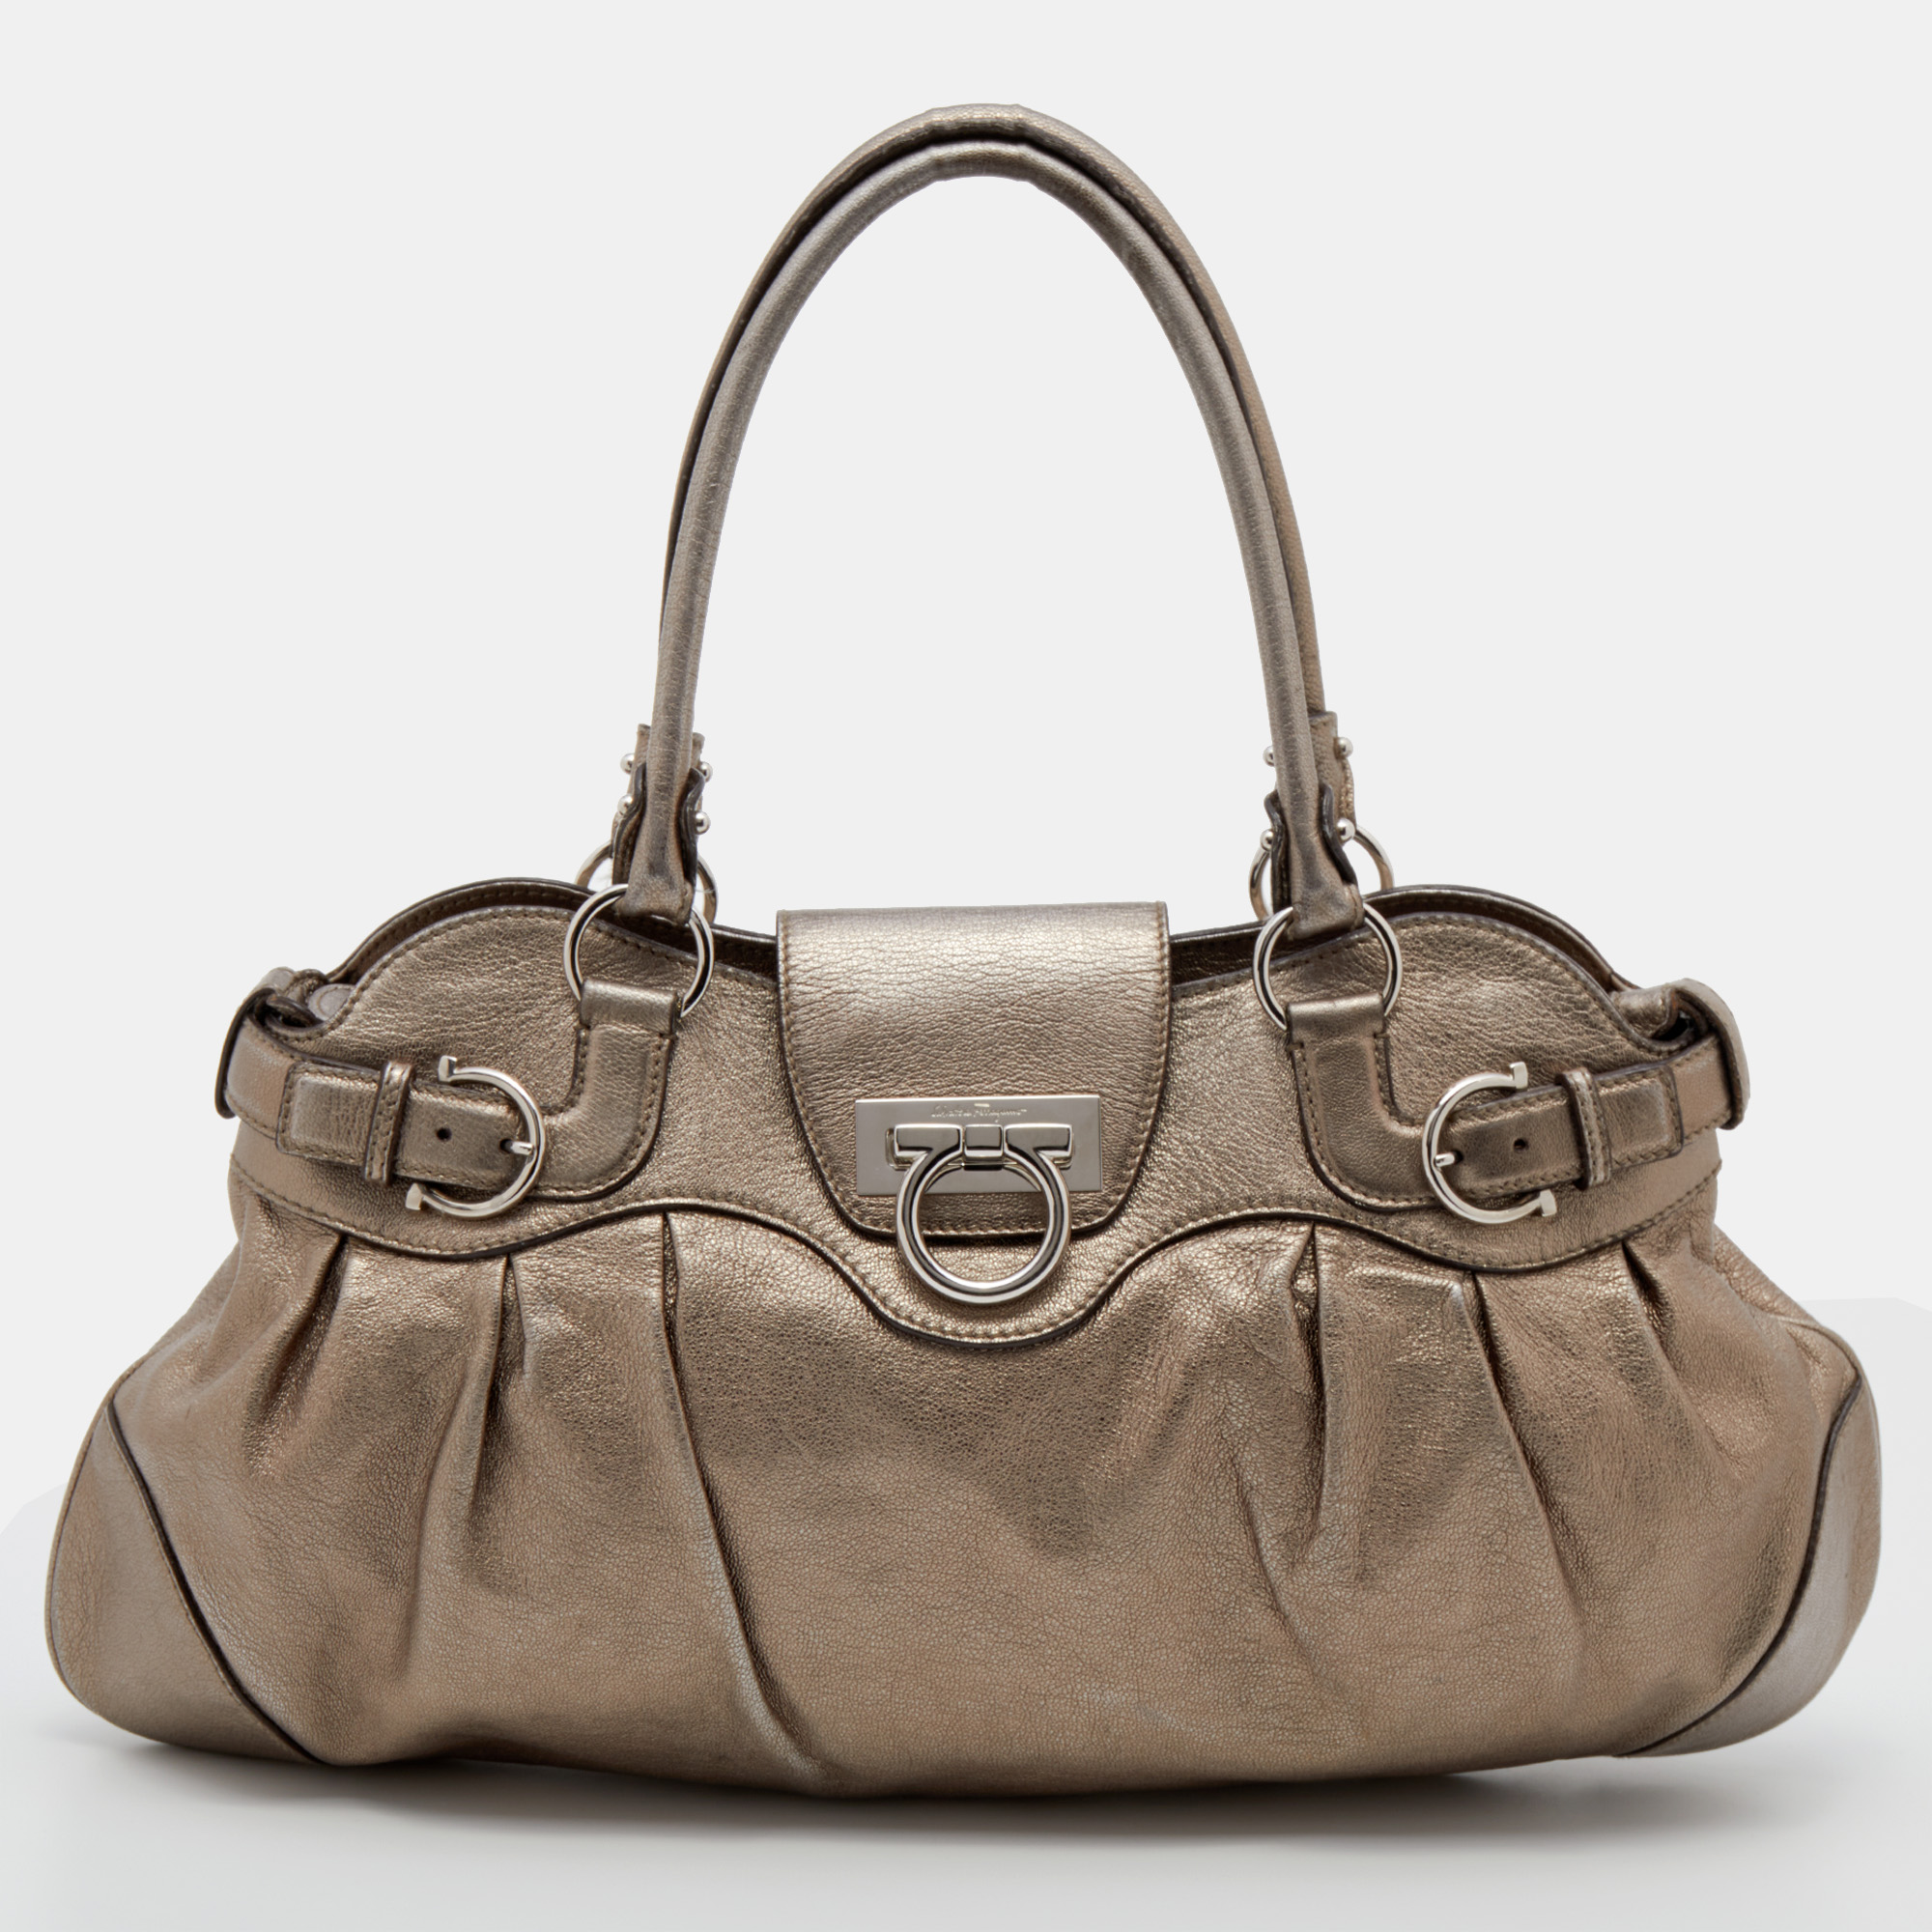 Pre-owned Ferragamo Metallic Gold Leather Marisa Shoulder Bag